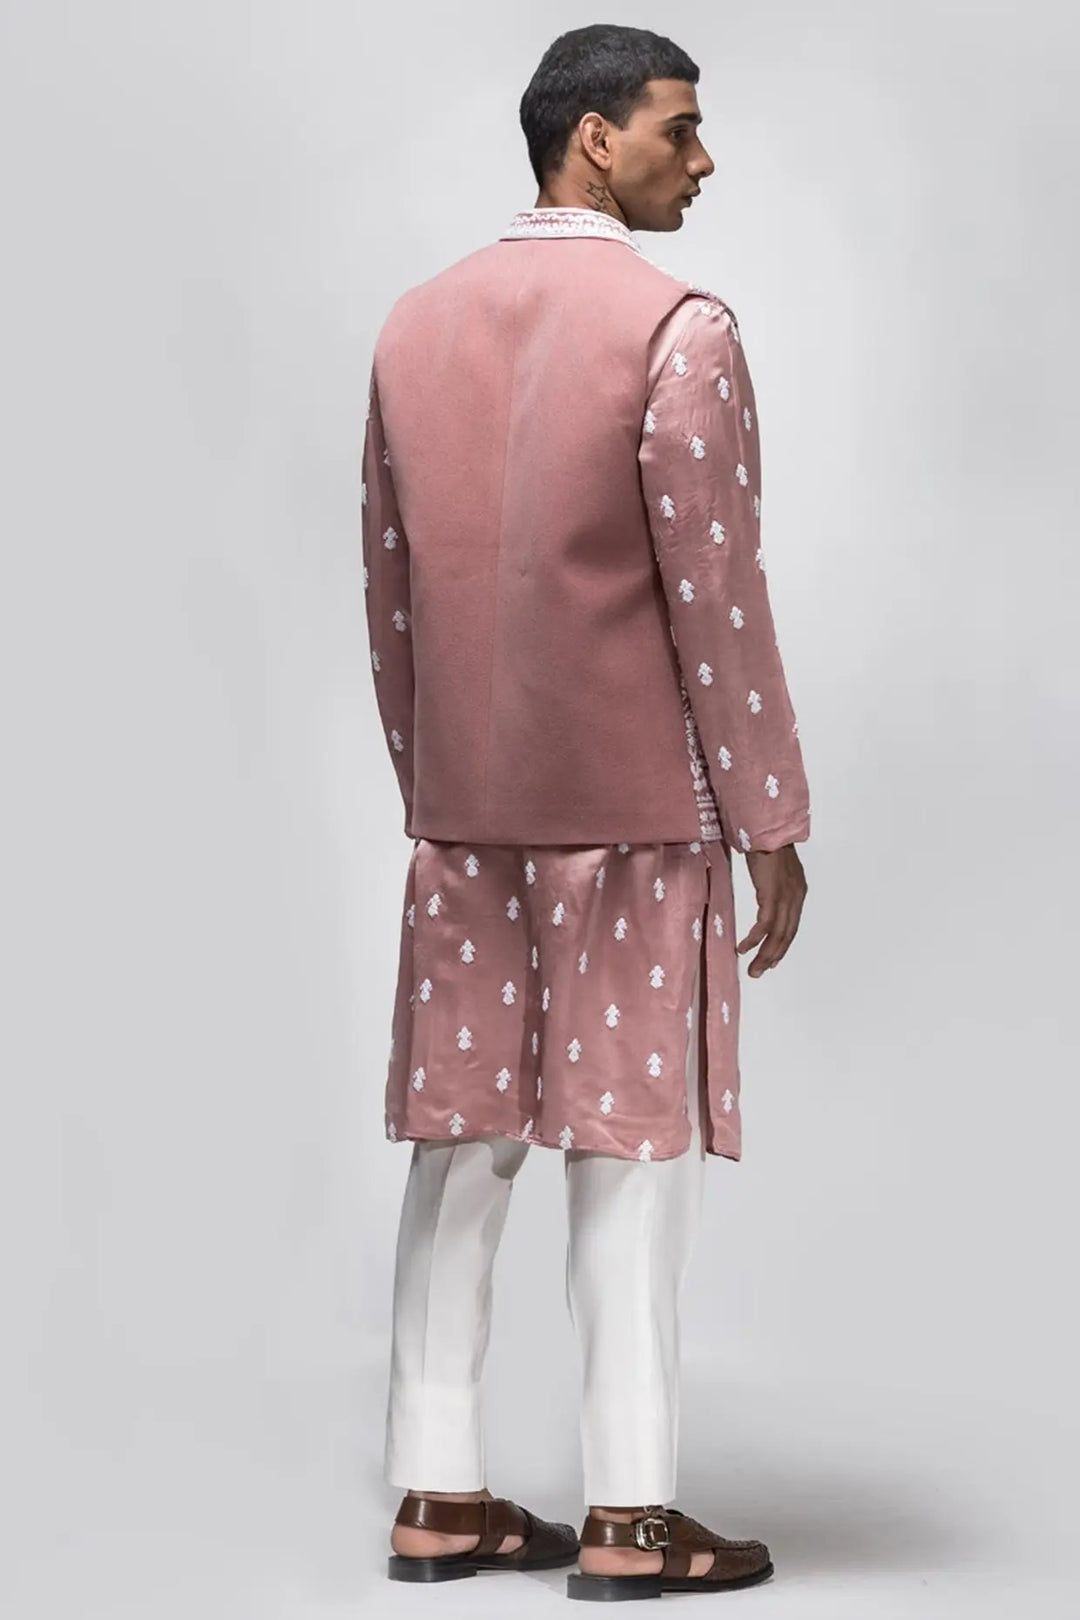 Monochrome Pink booti motif Dori Panel work Bundi Set - Asuka Couture